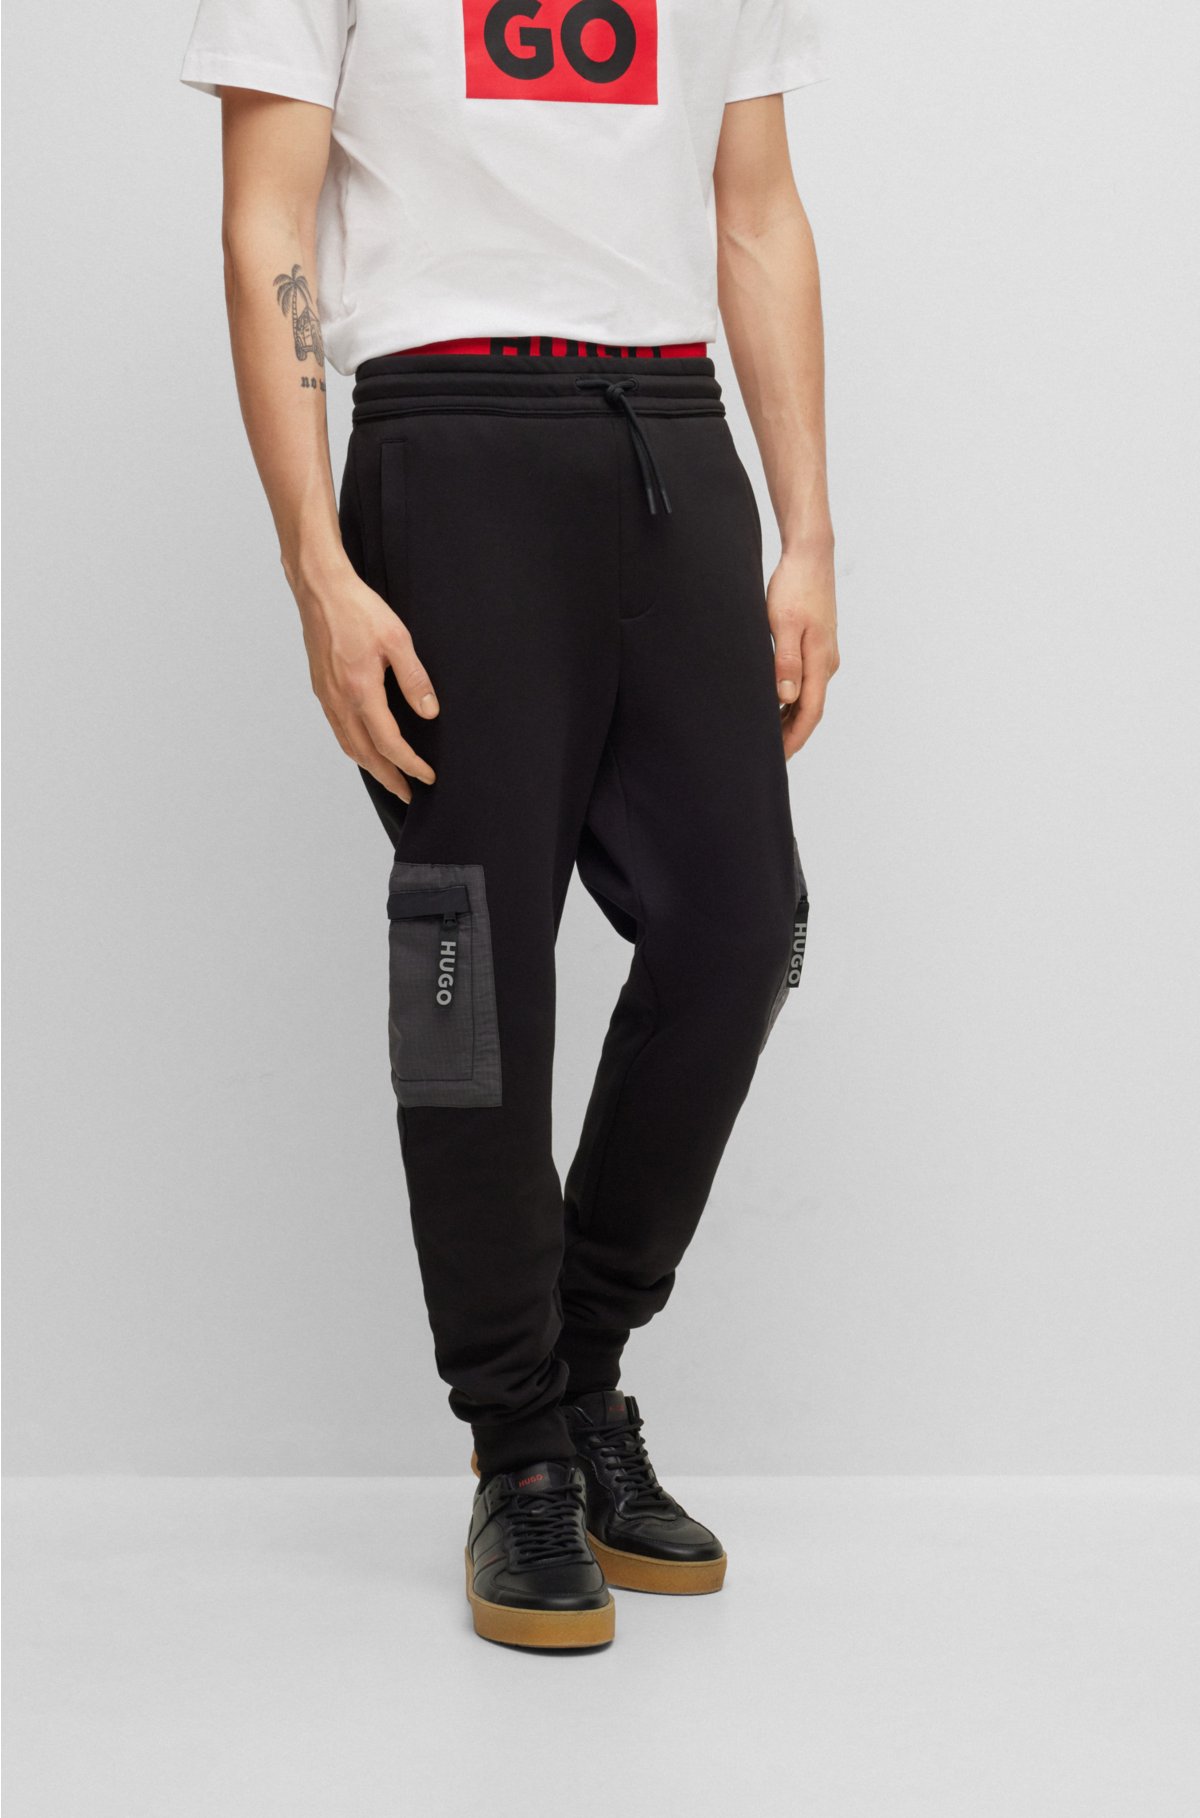 Pantalon Deportivo Con Puño Negro H&G Mujer